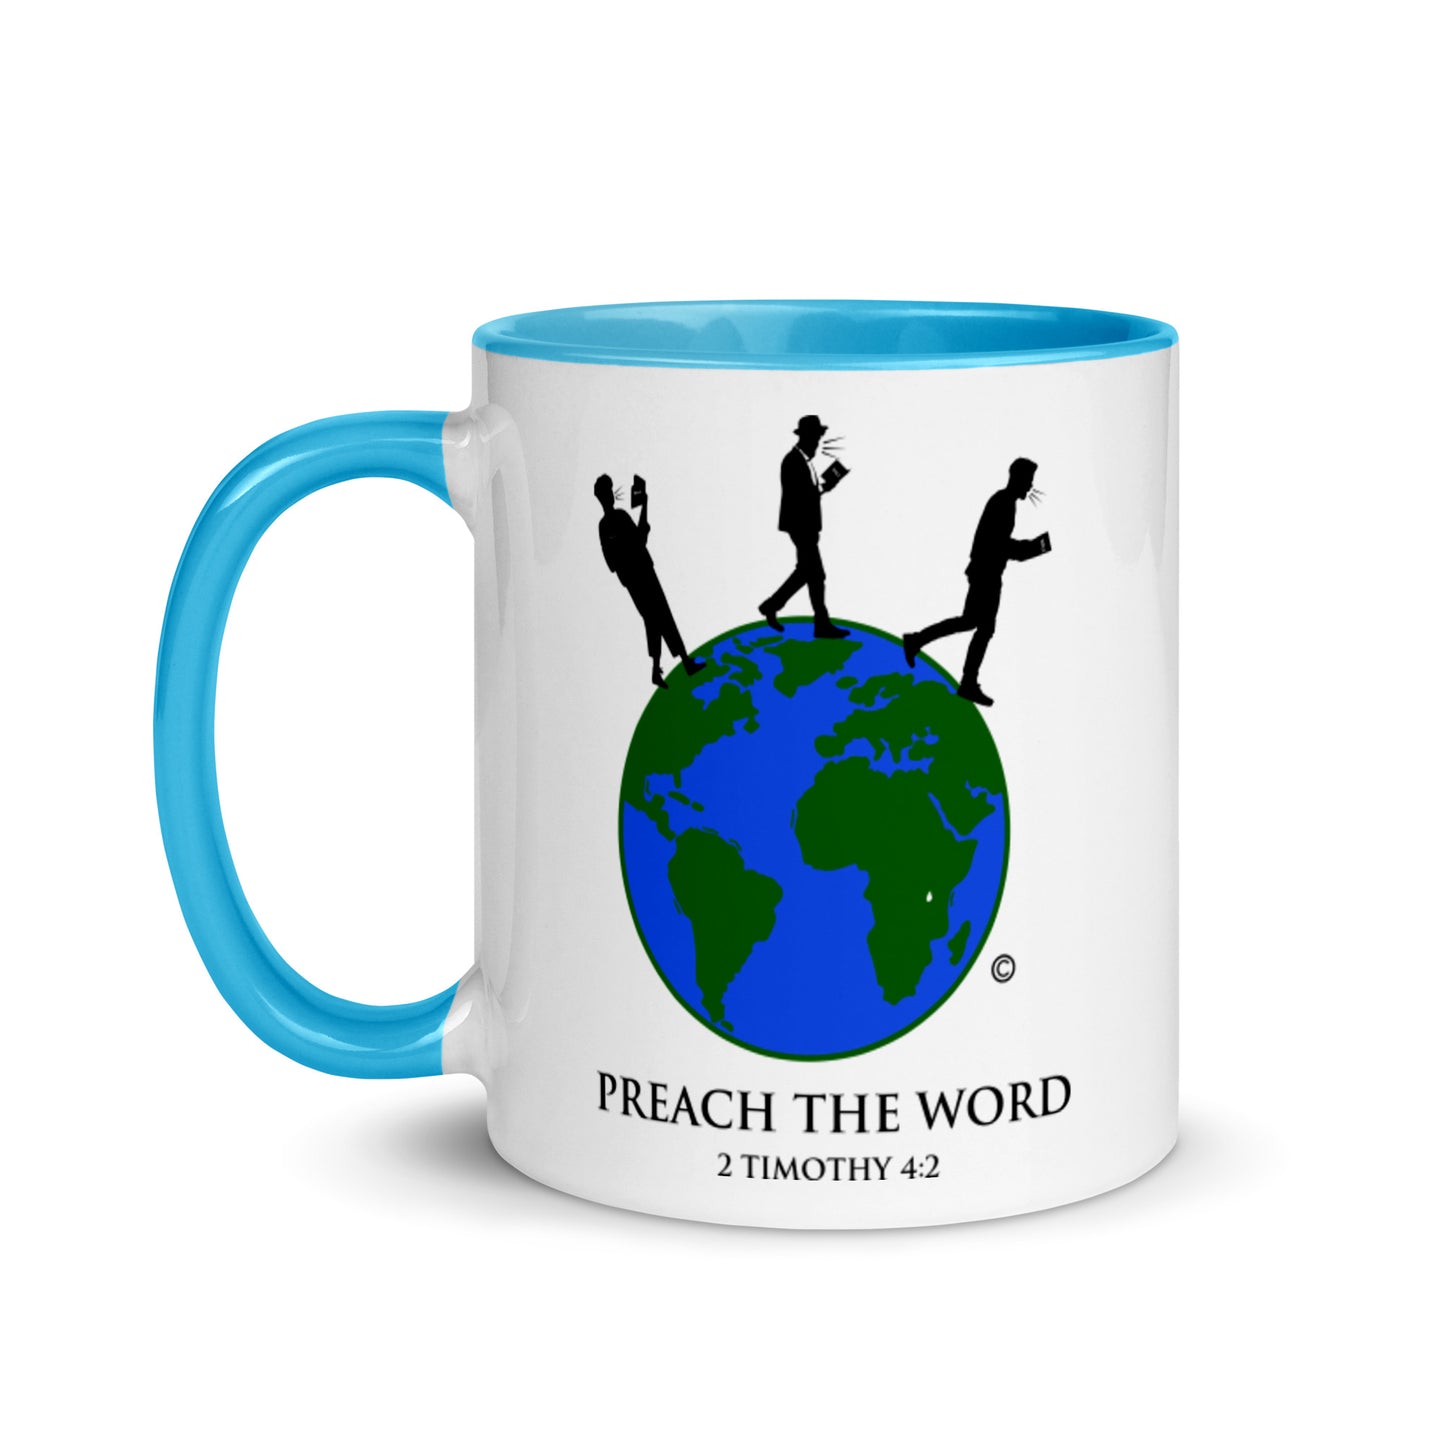 Preach the Word Mug with Color Inside